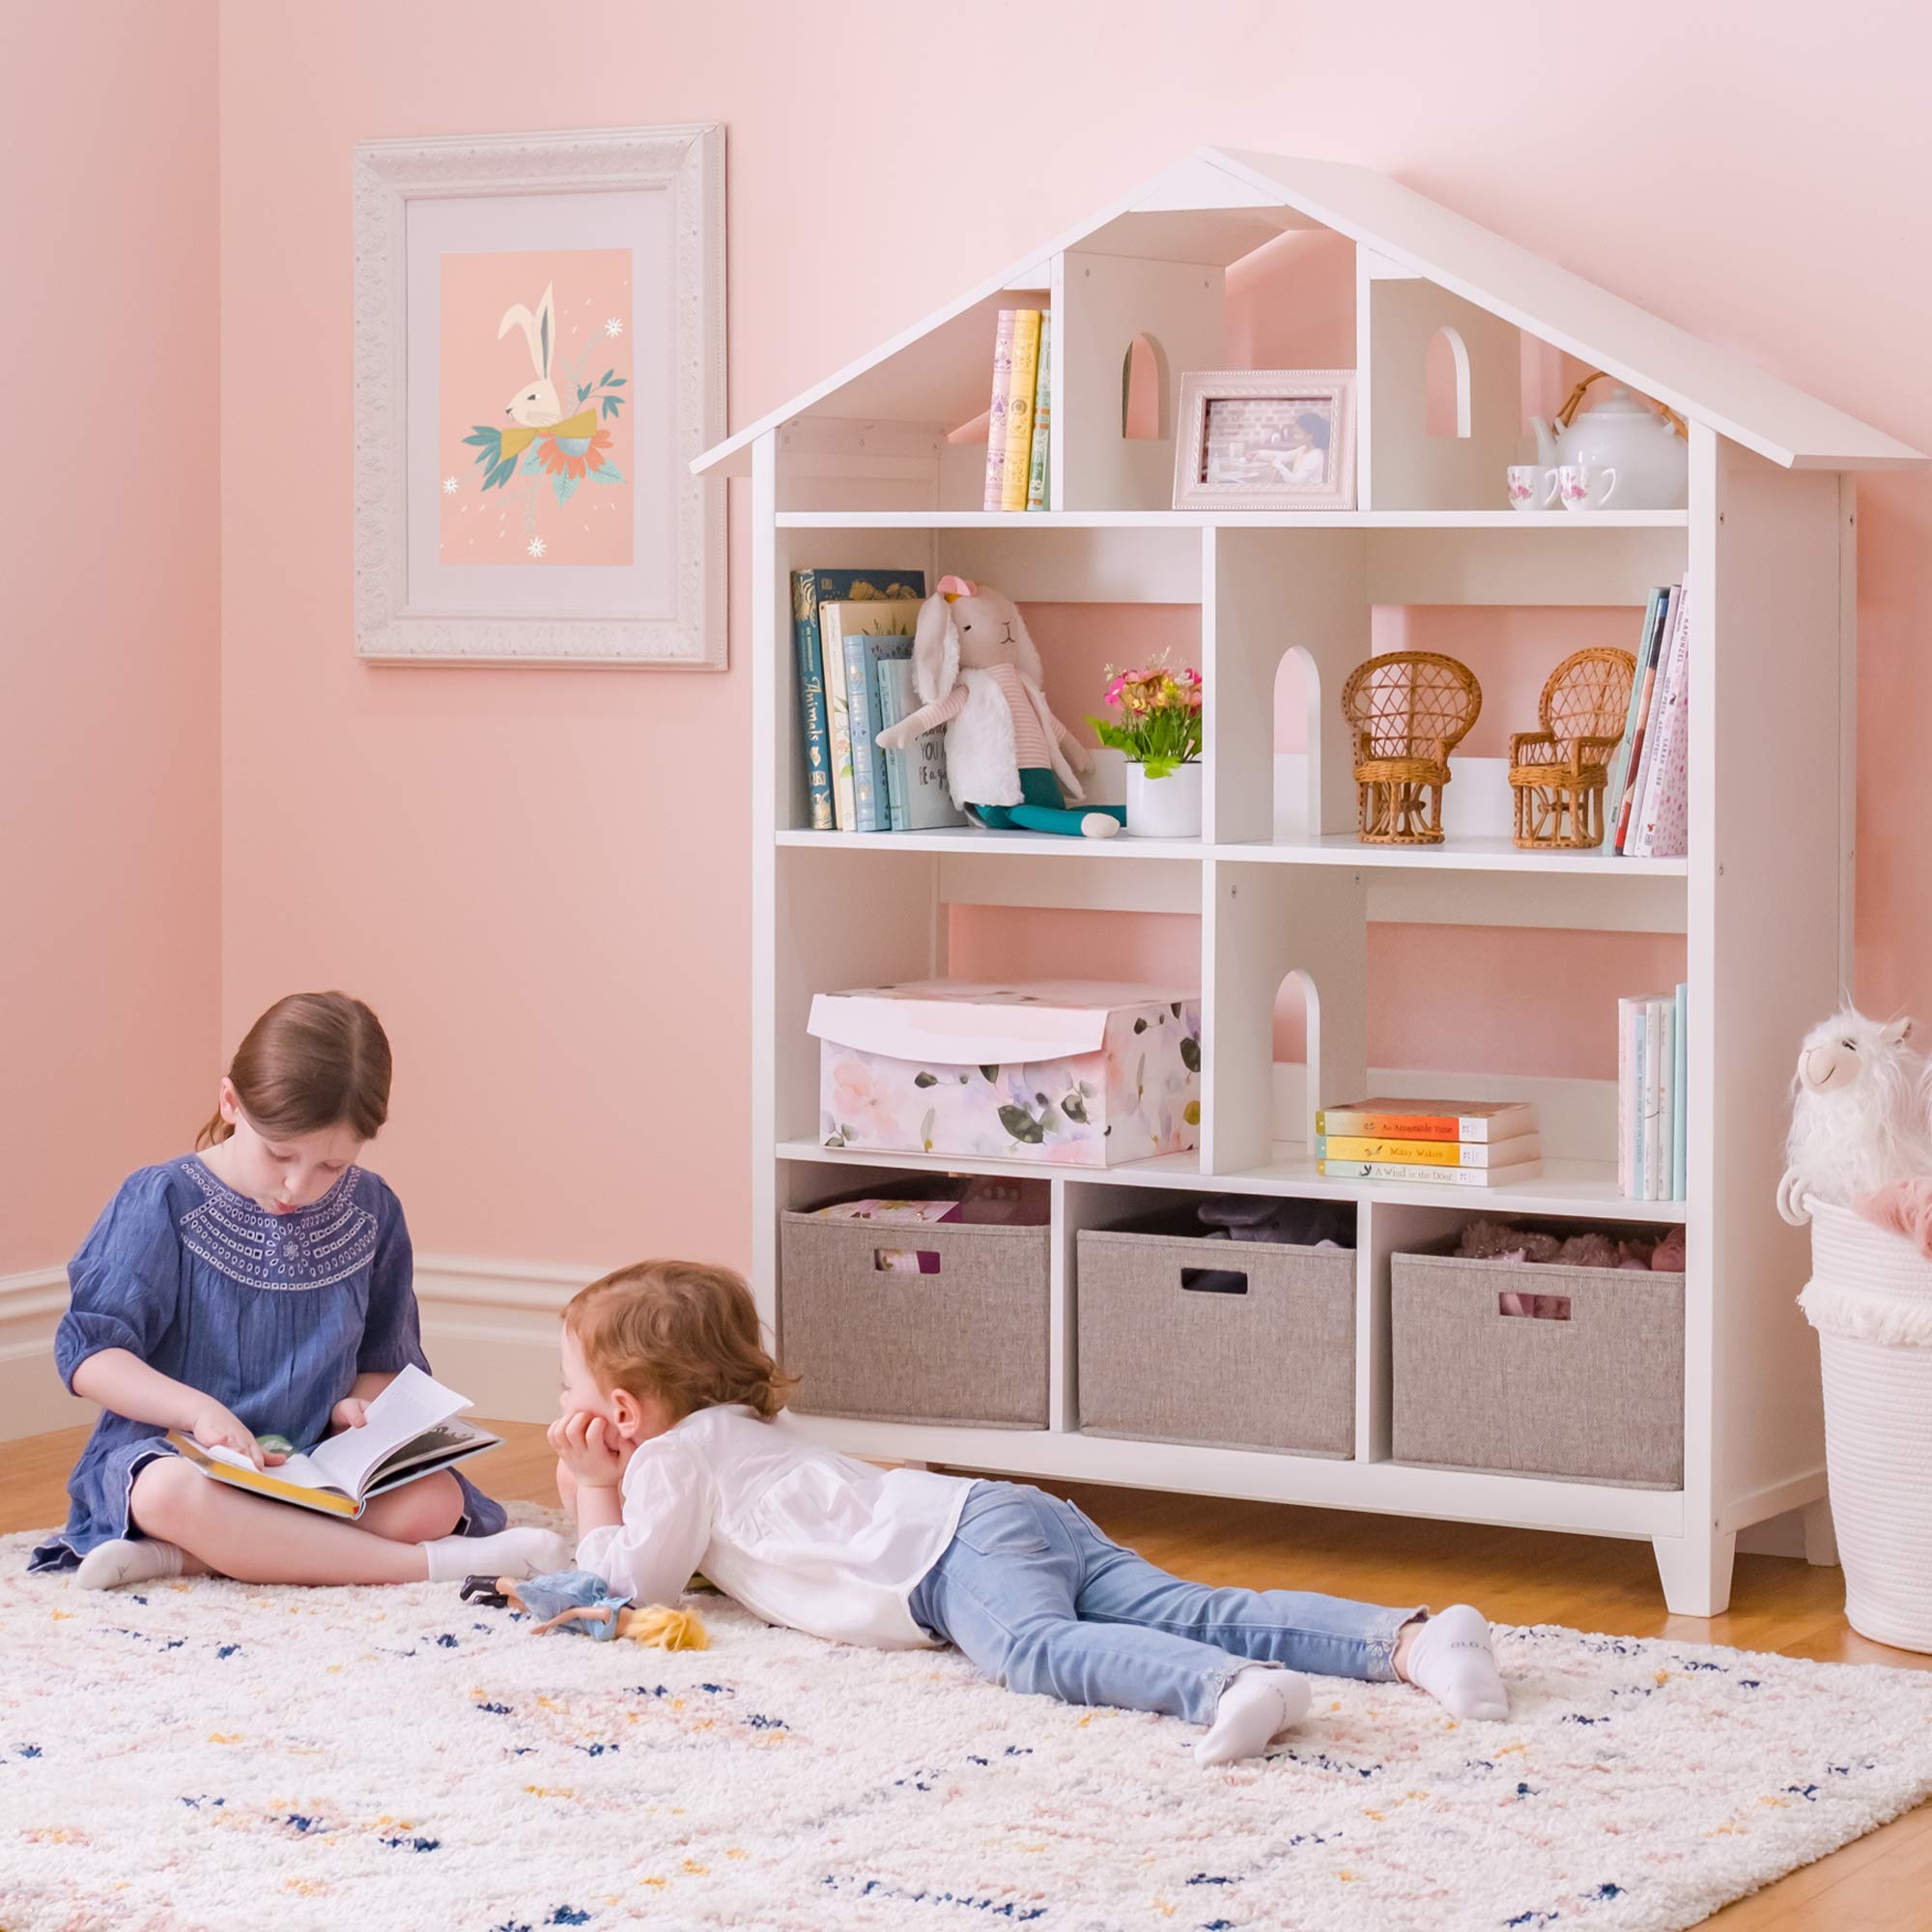 MARTHA STEWART Kids' Deluxe Dollhouse Bookcase - Creamy White: Large Wooden Organizer Shelves with Storage Bins for Books, Dolls, Toys, School Supplies